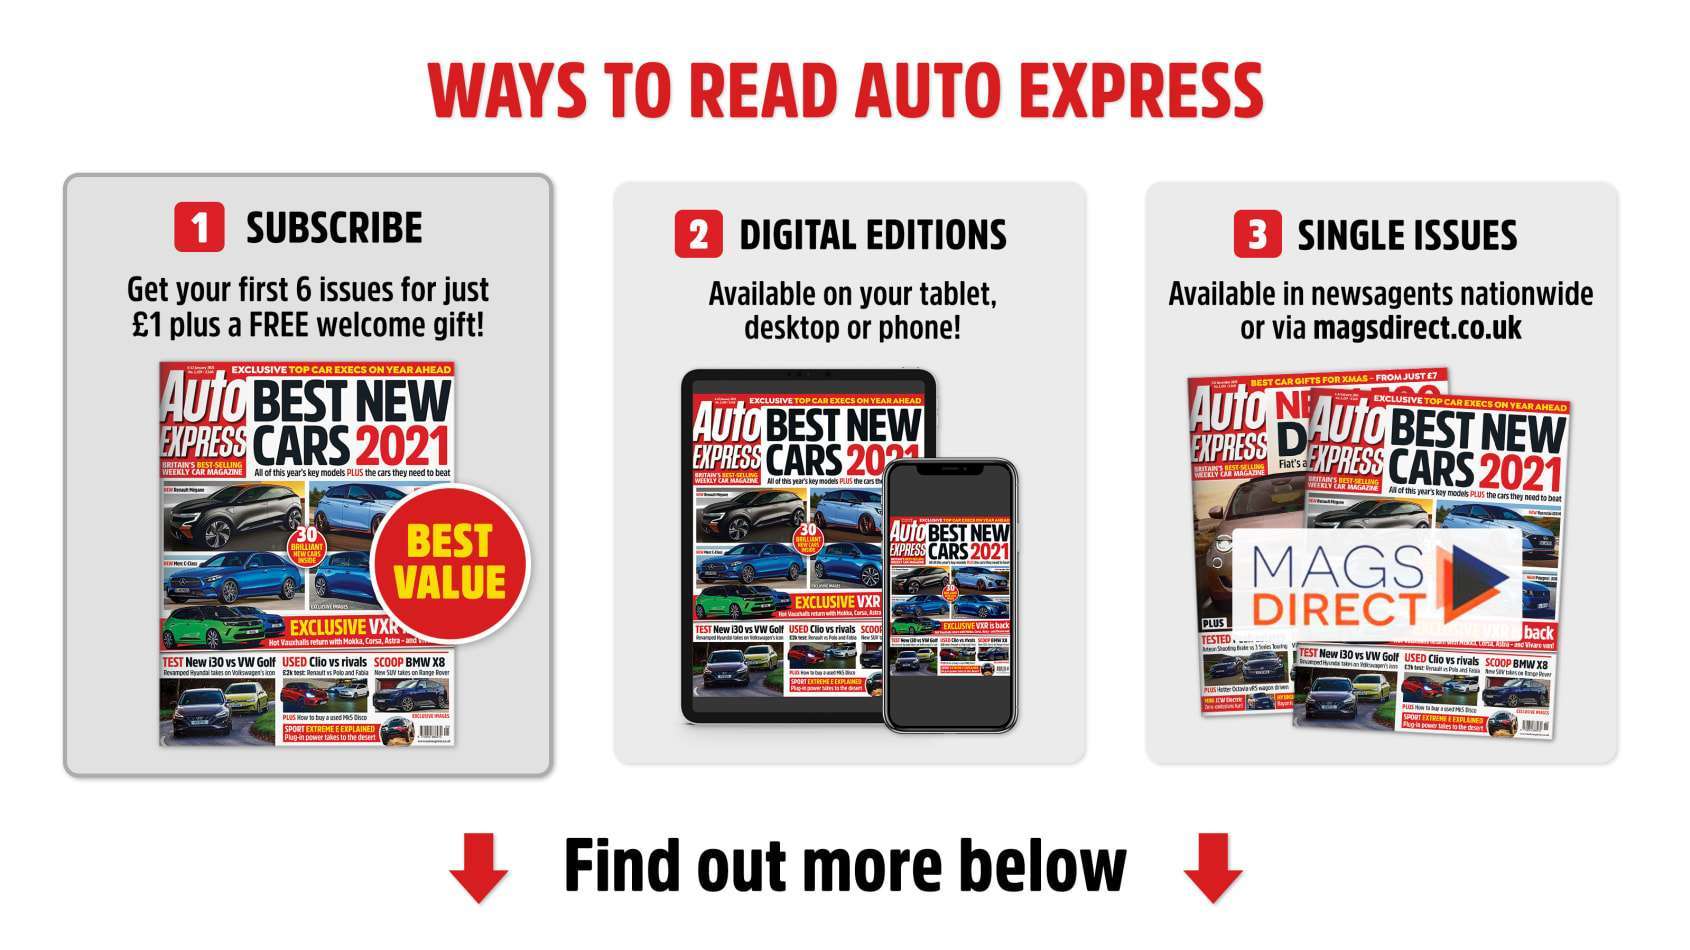 Ways to read auto express